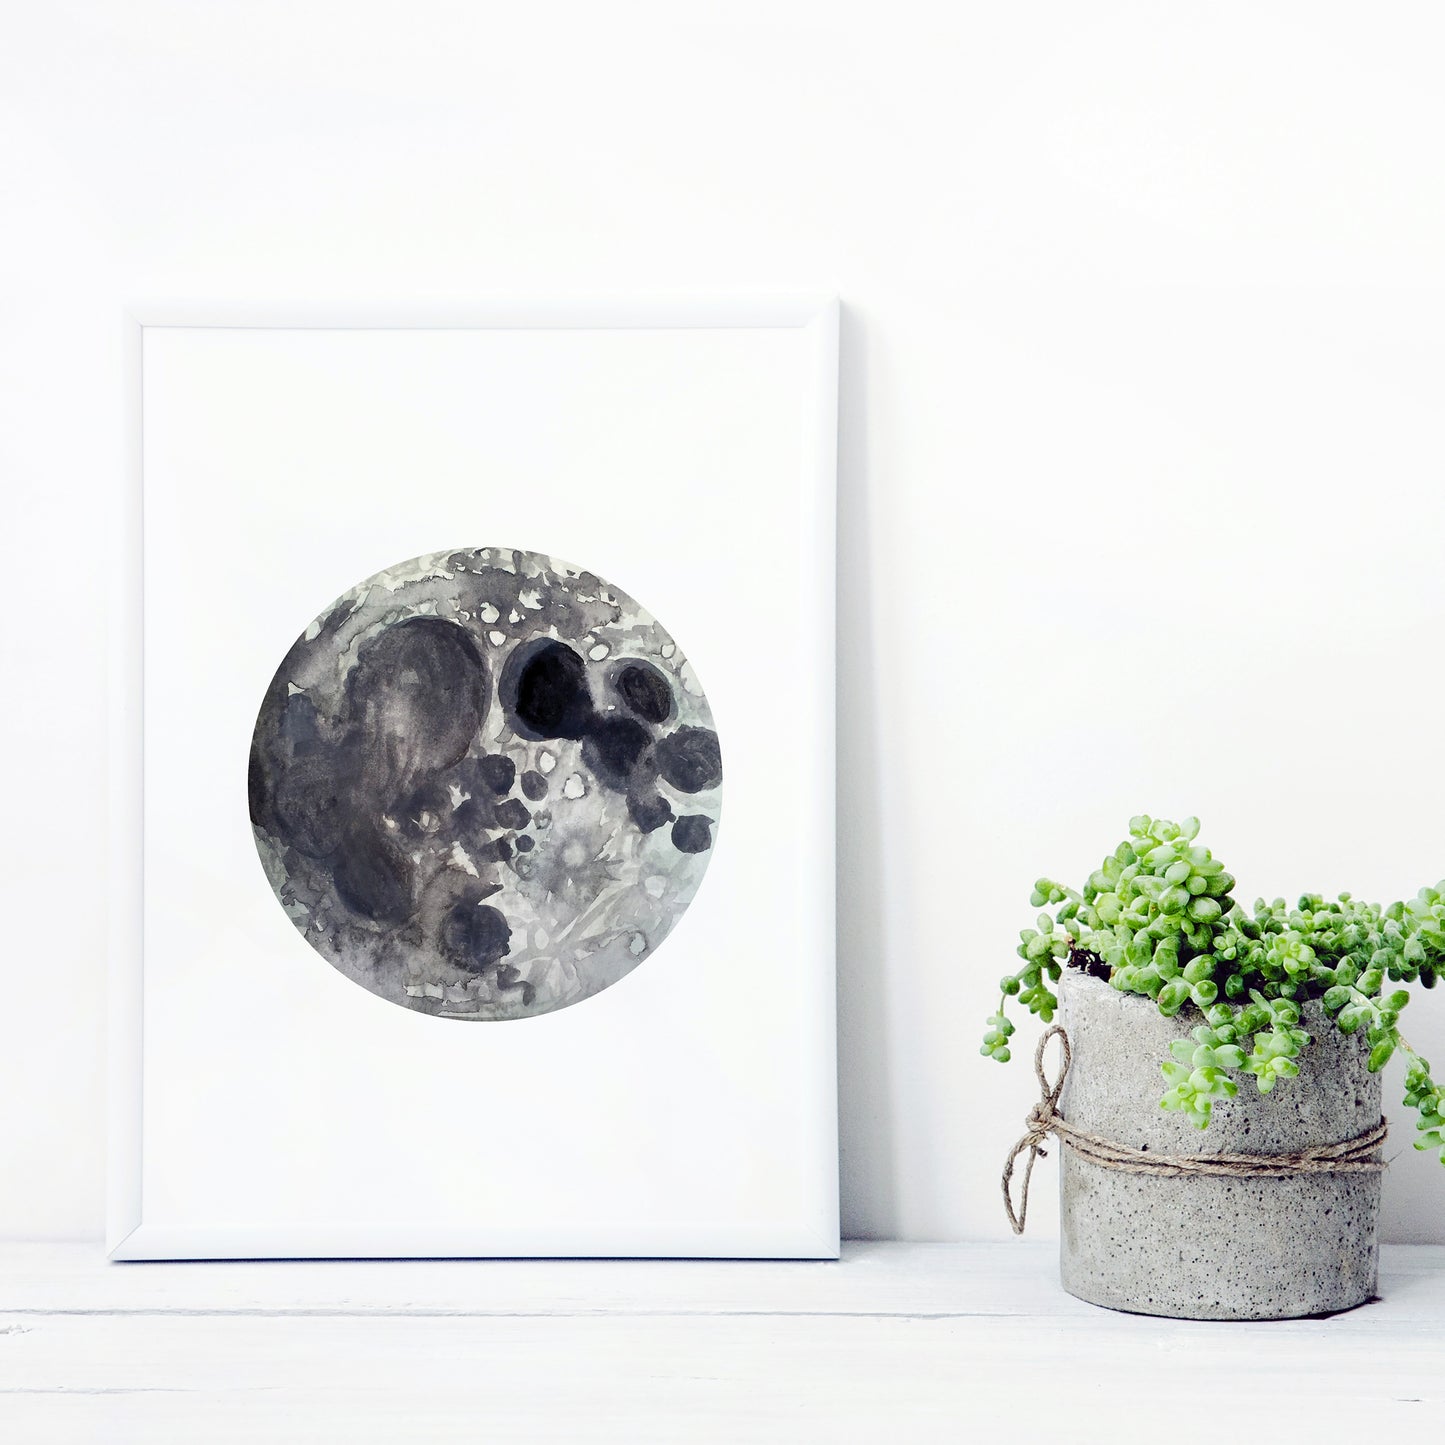 Moon Art Print